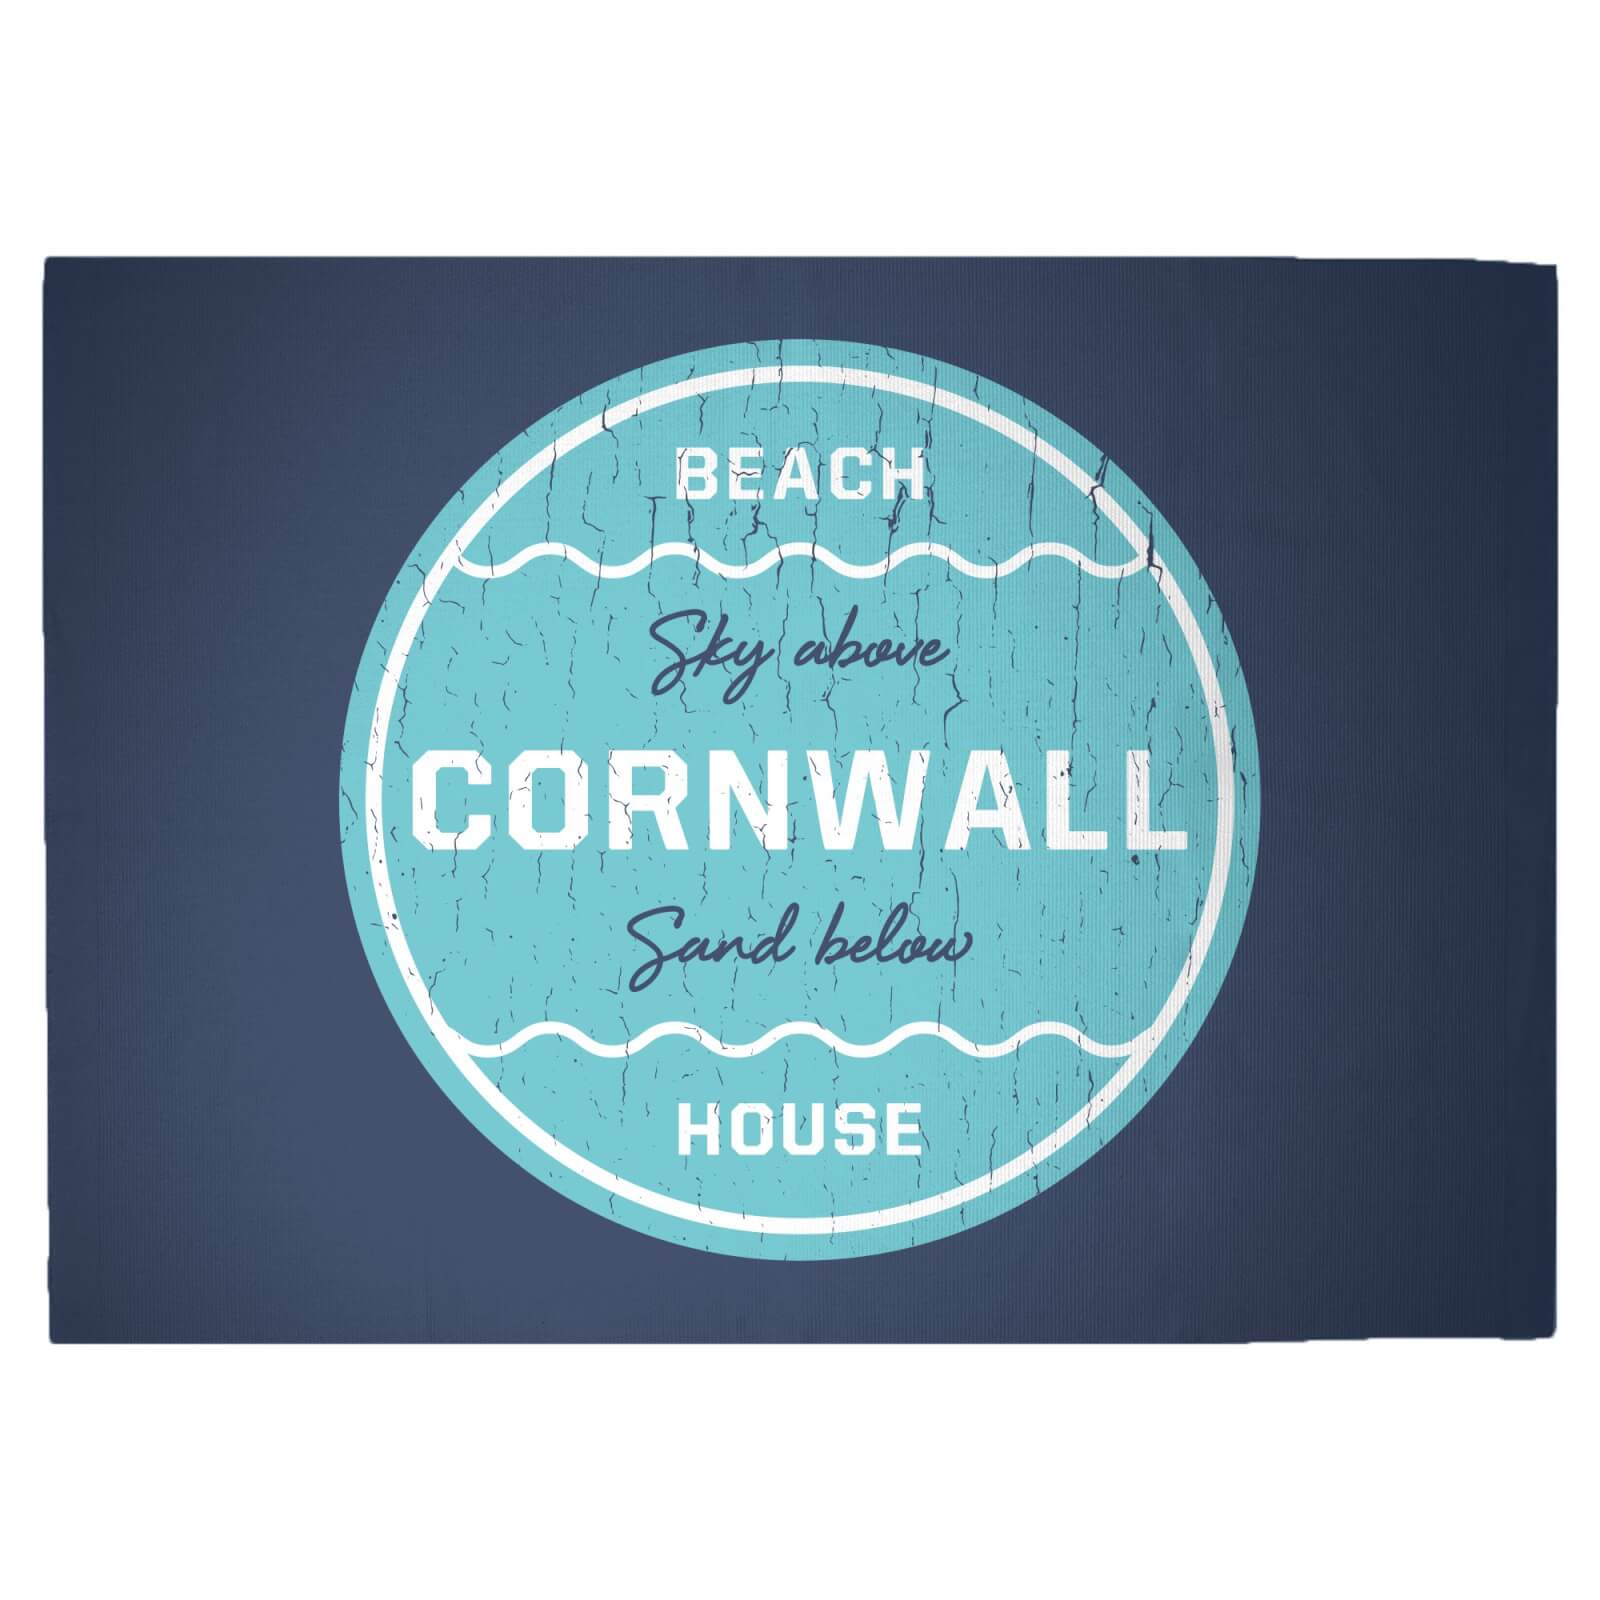 Cornwall Beach Badge Woven Rug - Large